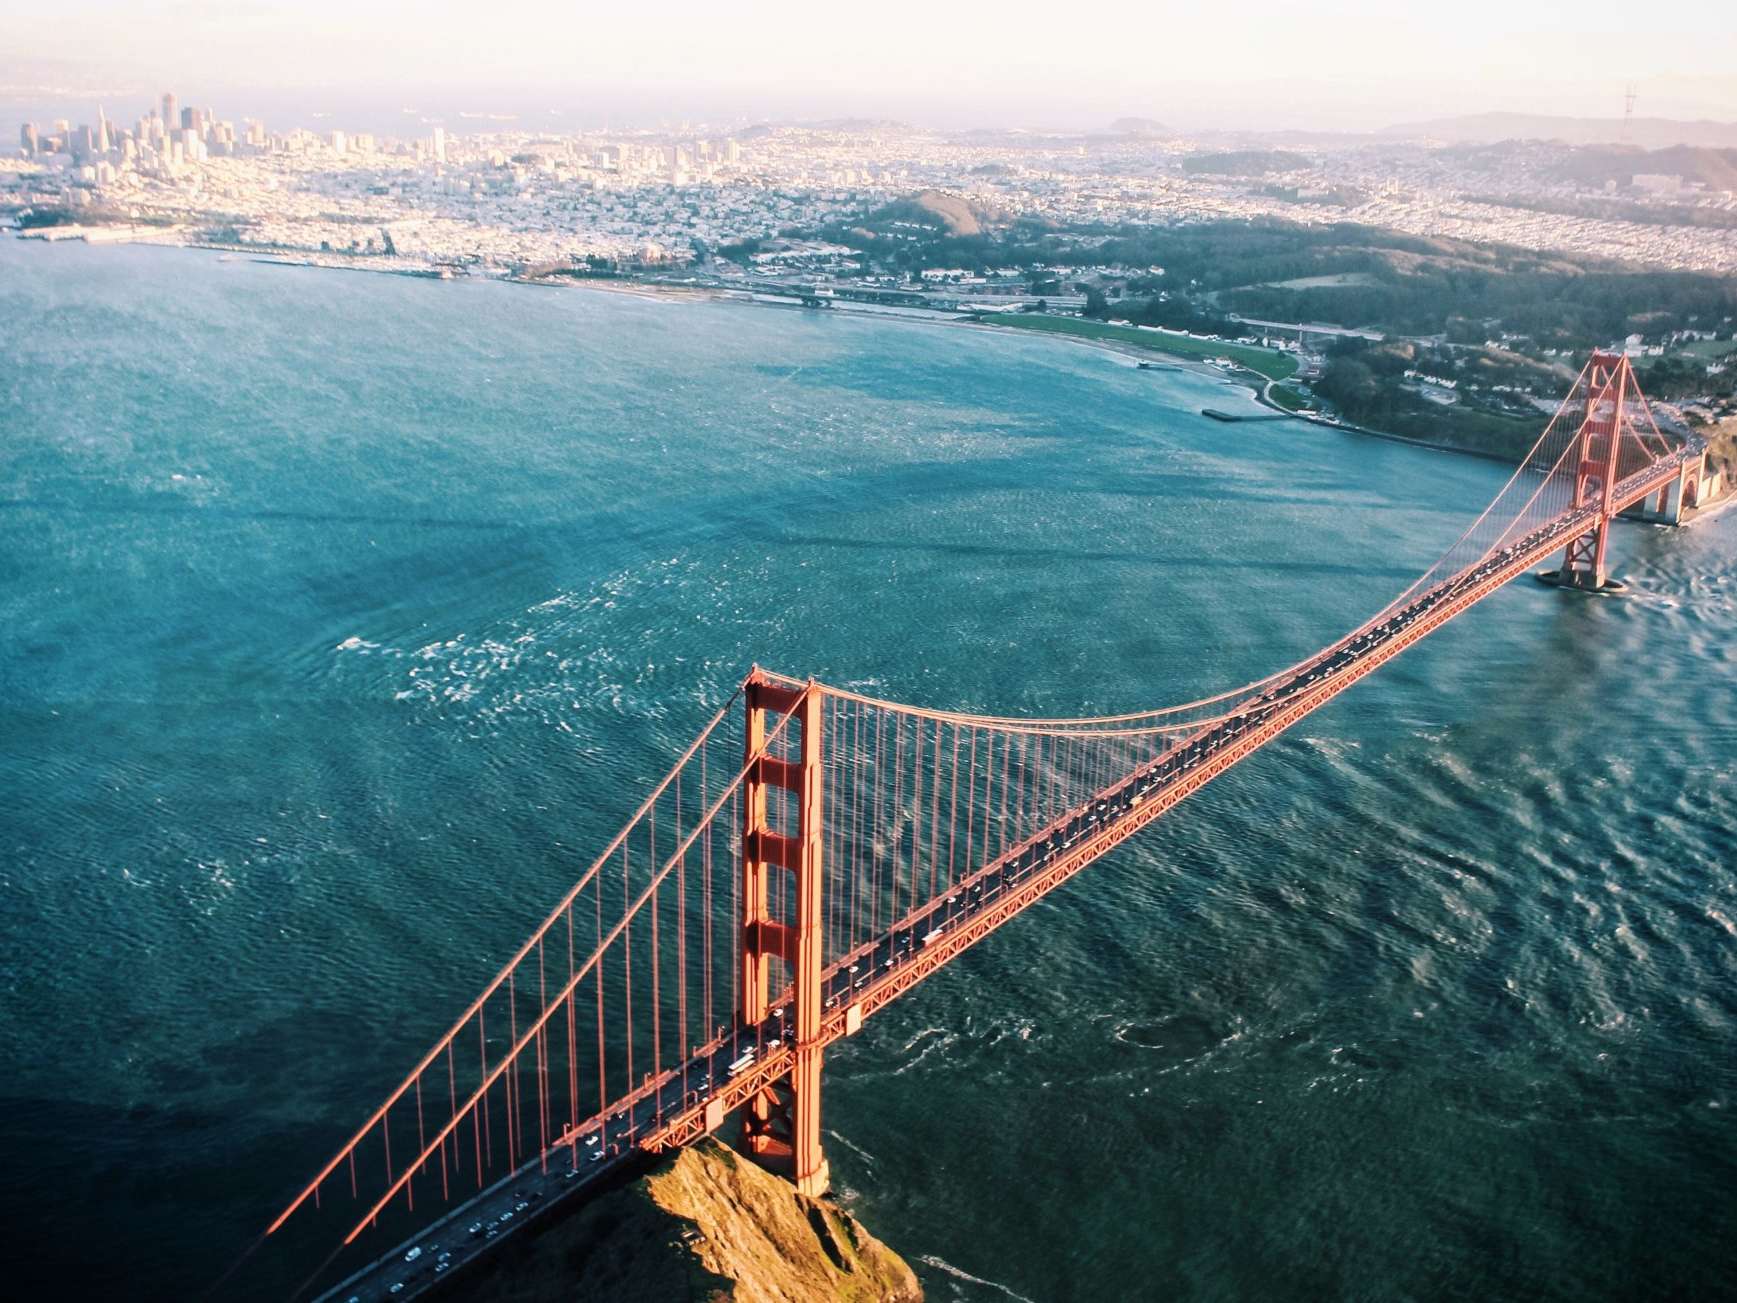 San Francisco Bay Area Aerial View